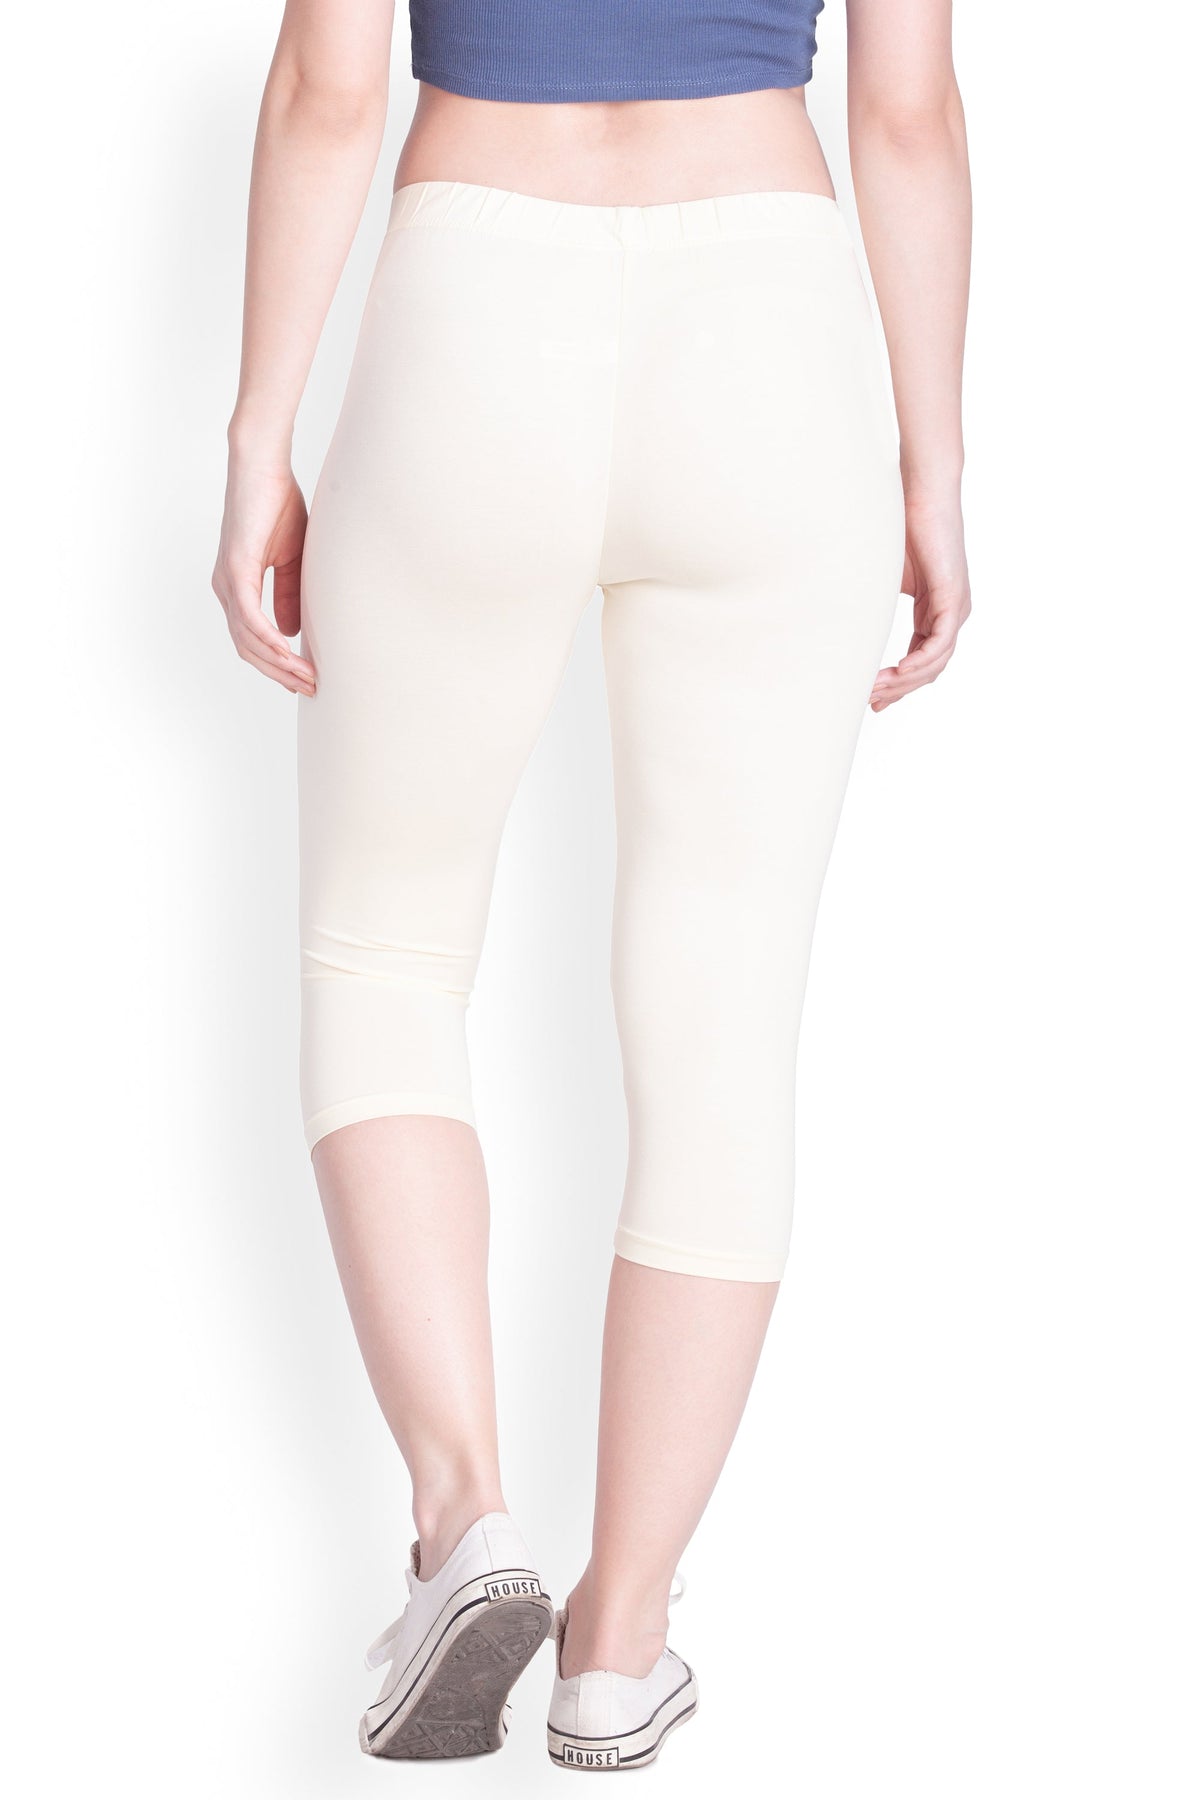 Women & Plus Essential Basic Cotton Spandex Stretch Below Knee Length 15  Leggings (WHITE, S) 